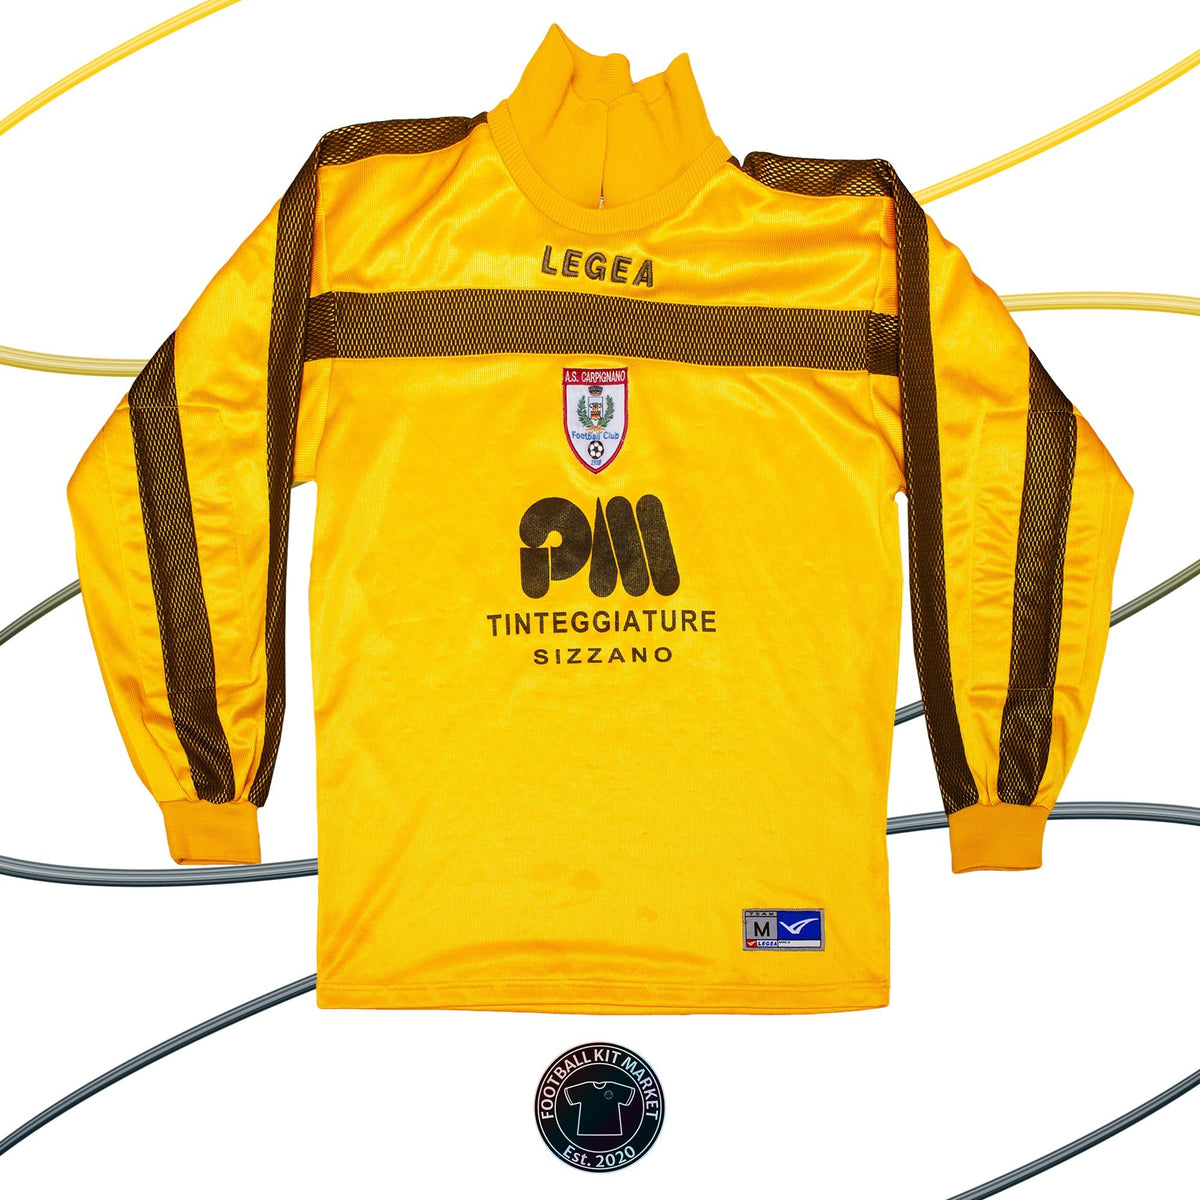 Genuine AS CARPIGNANO Goalkeeper Shirt - LEGEA (M) - Product Image from Football Kit Market